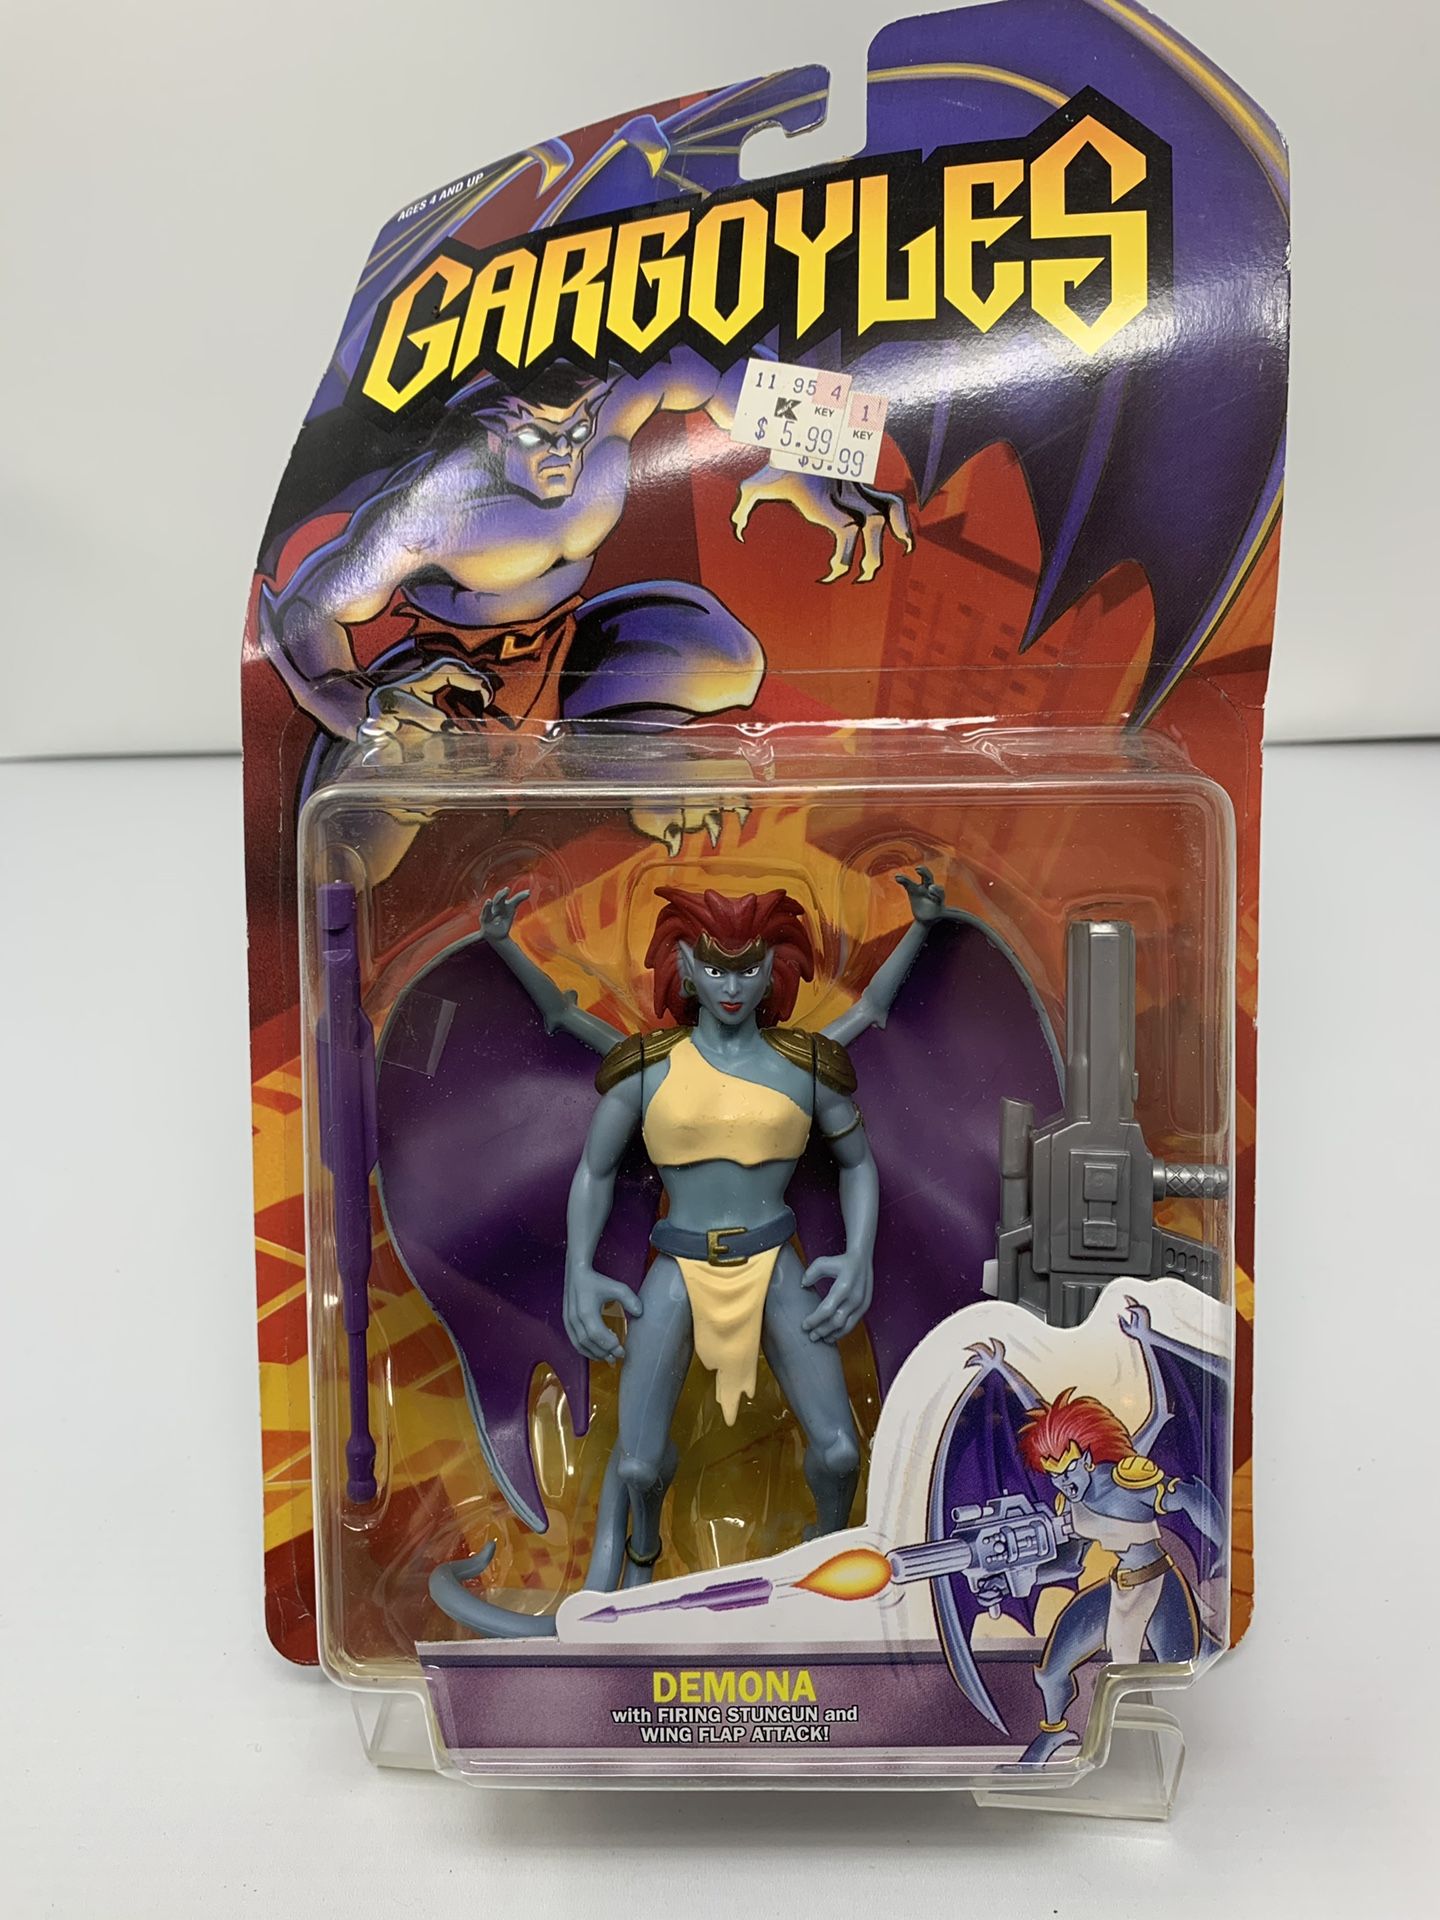 Demona of the Hit Animated TV Series Gargoyles (Brand New/Card Bent)